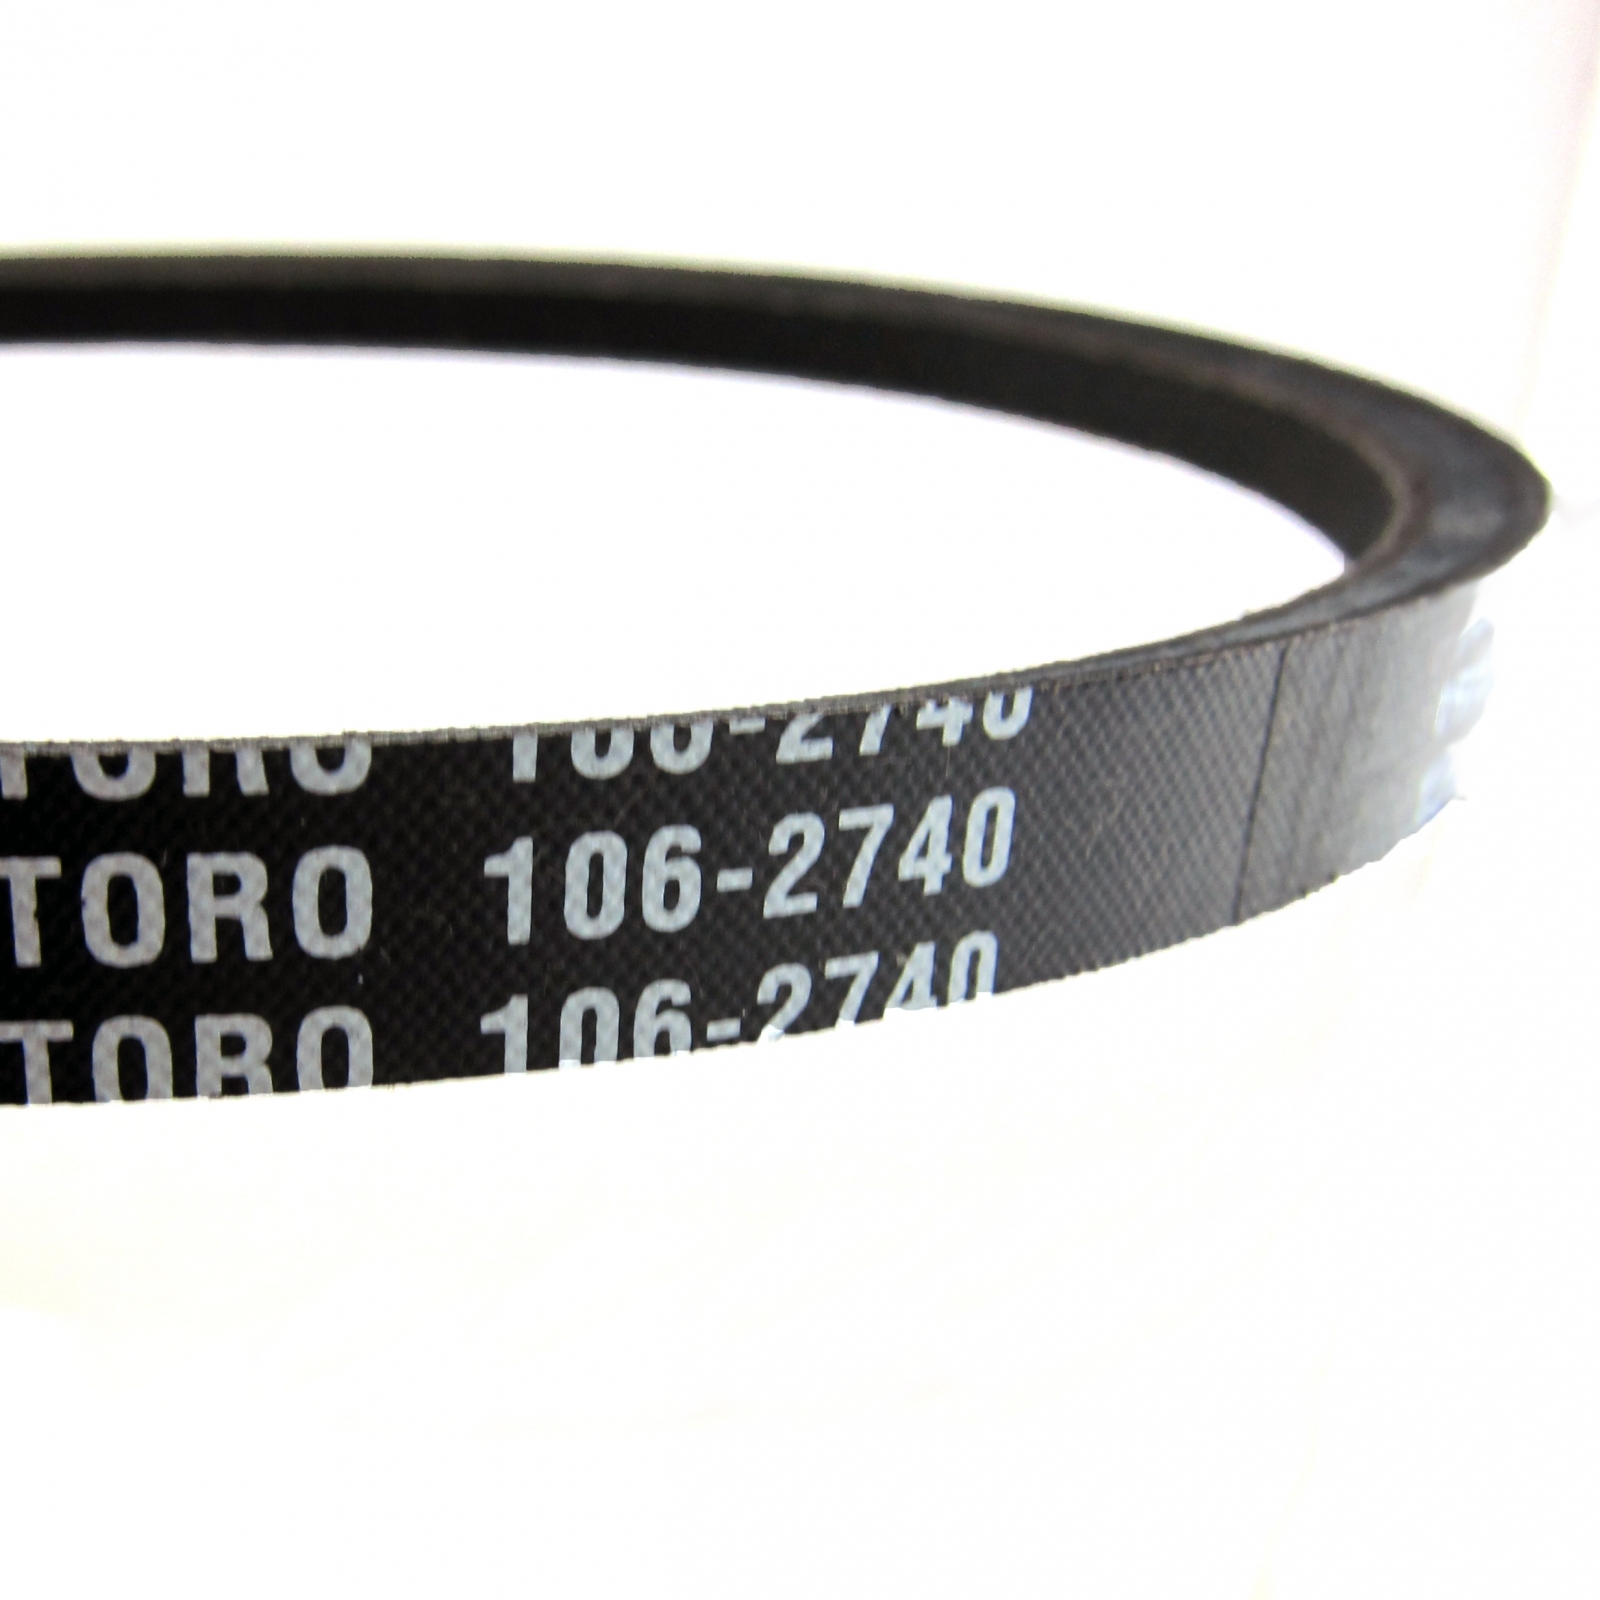 Hydro Drive belt 265-H thru 270-H models TORO 926954 Replacement Drive Belt 